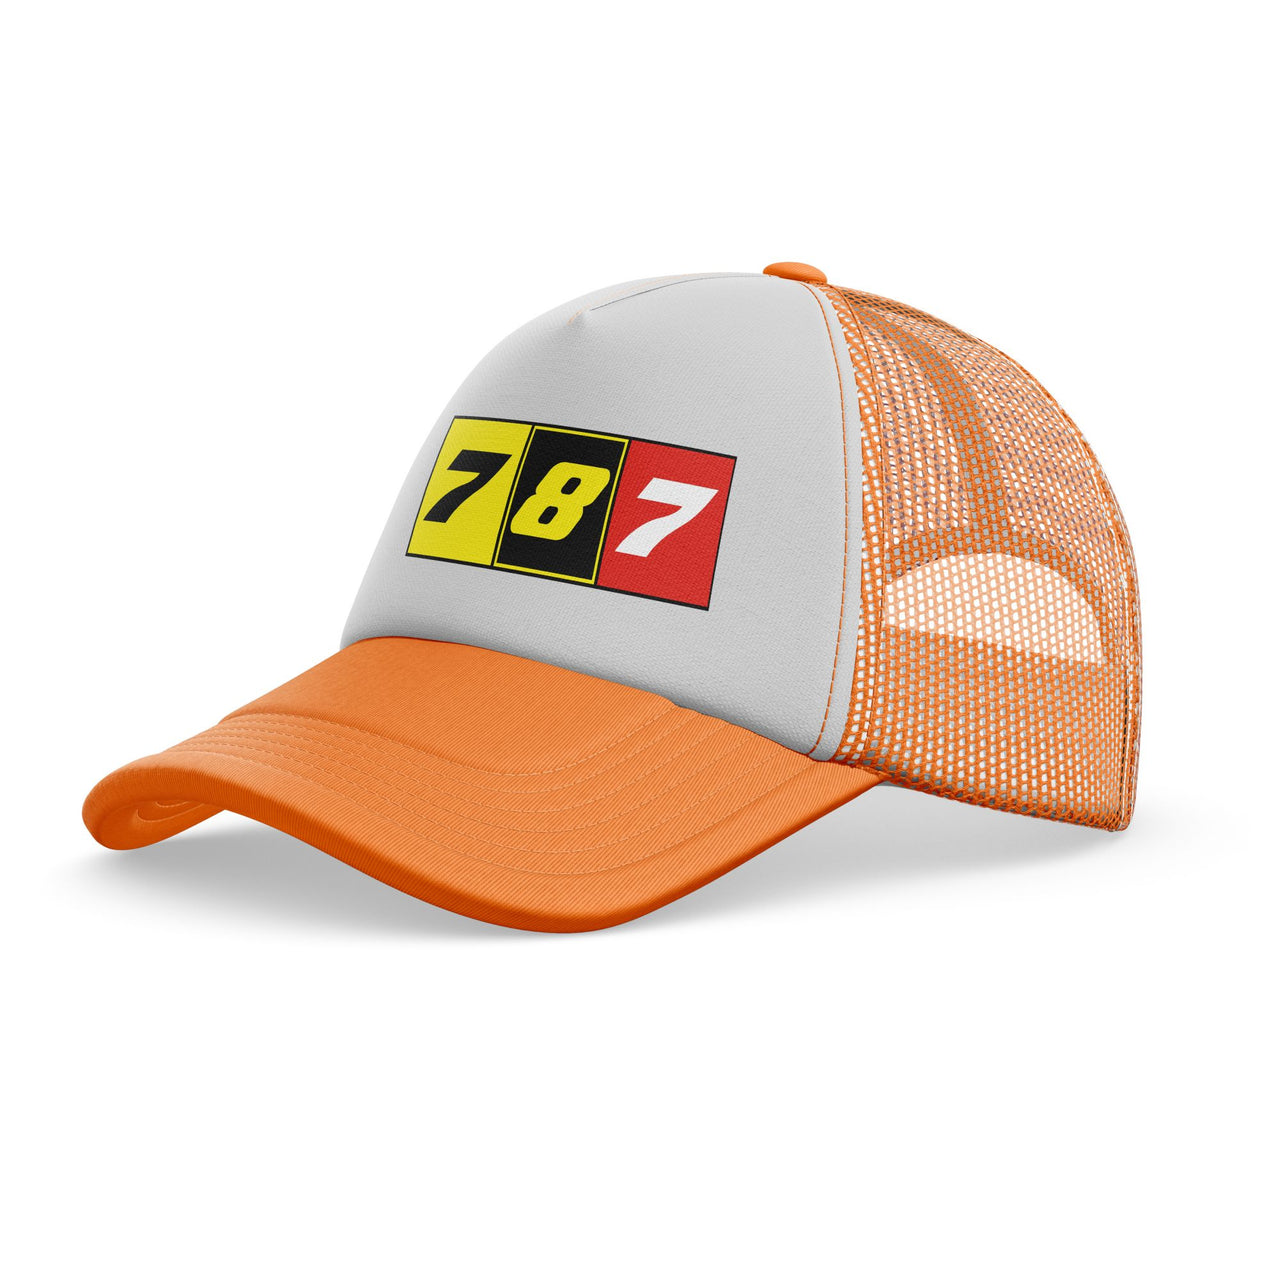 Flat Colourful 787 Designed Trucker Caps & Hats